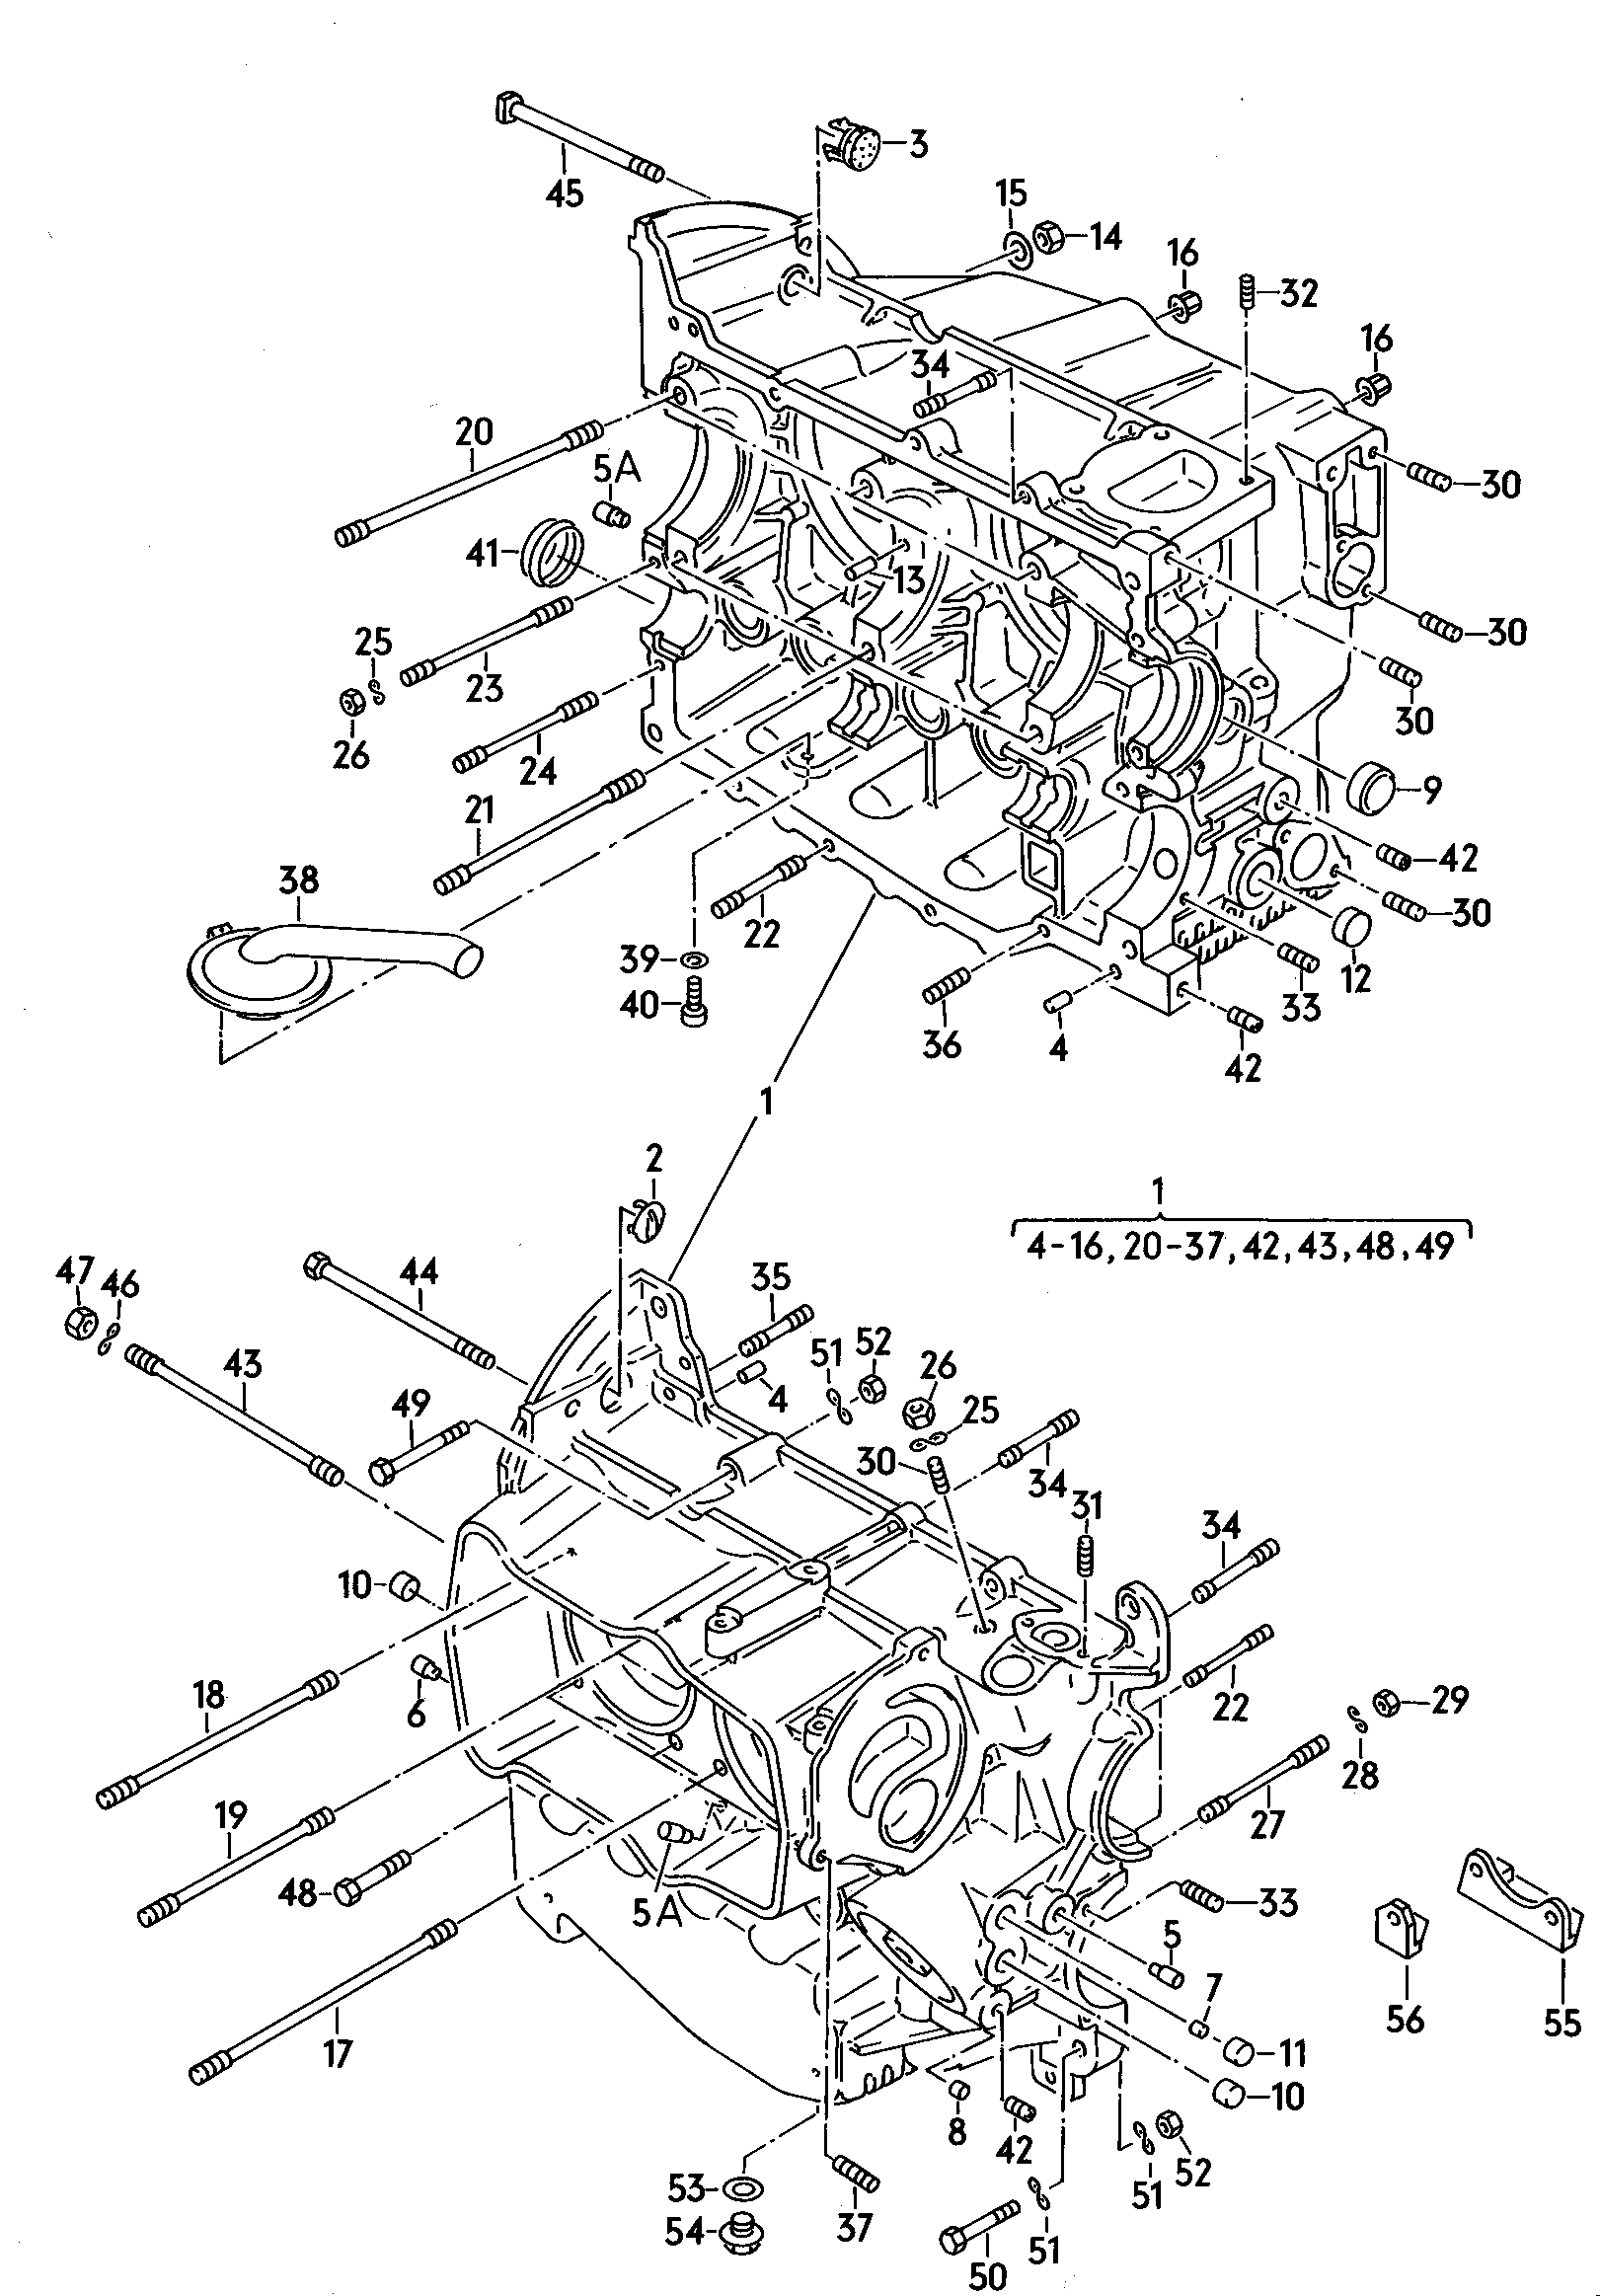 Carter-moteur 1,9l - Typ 2/syncro - t2